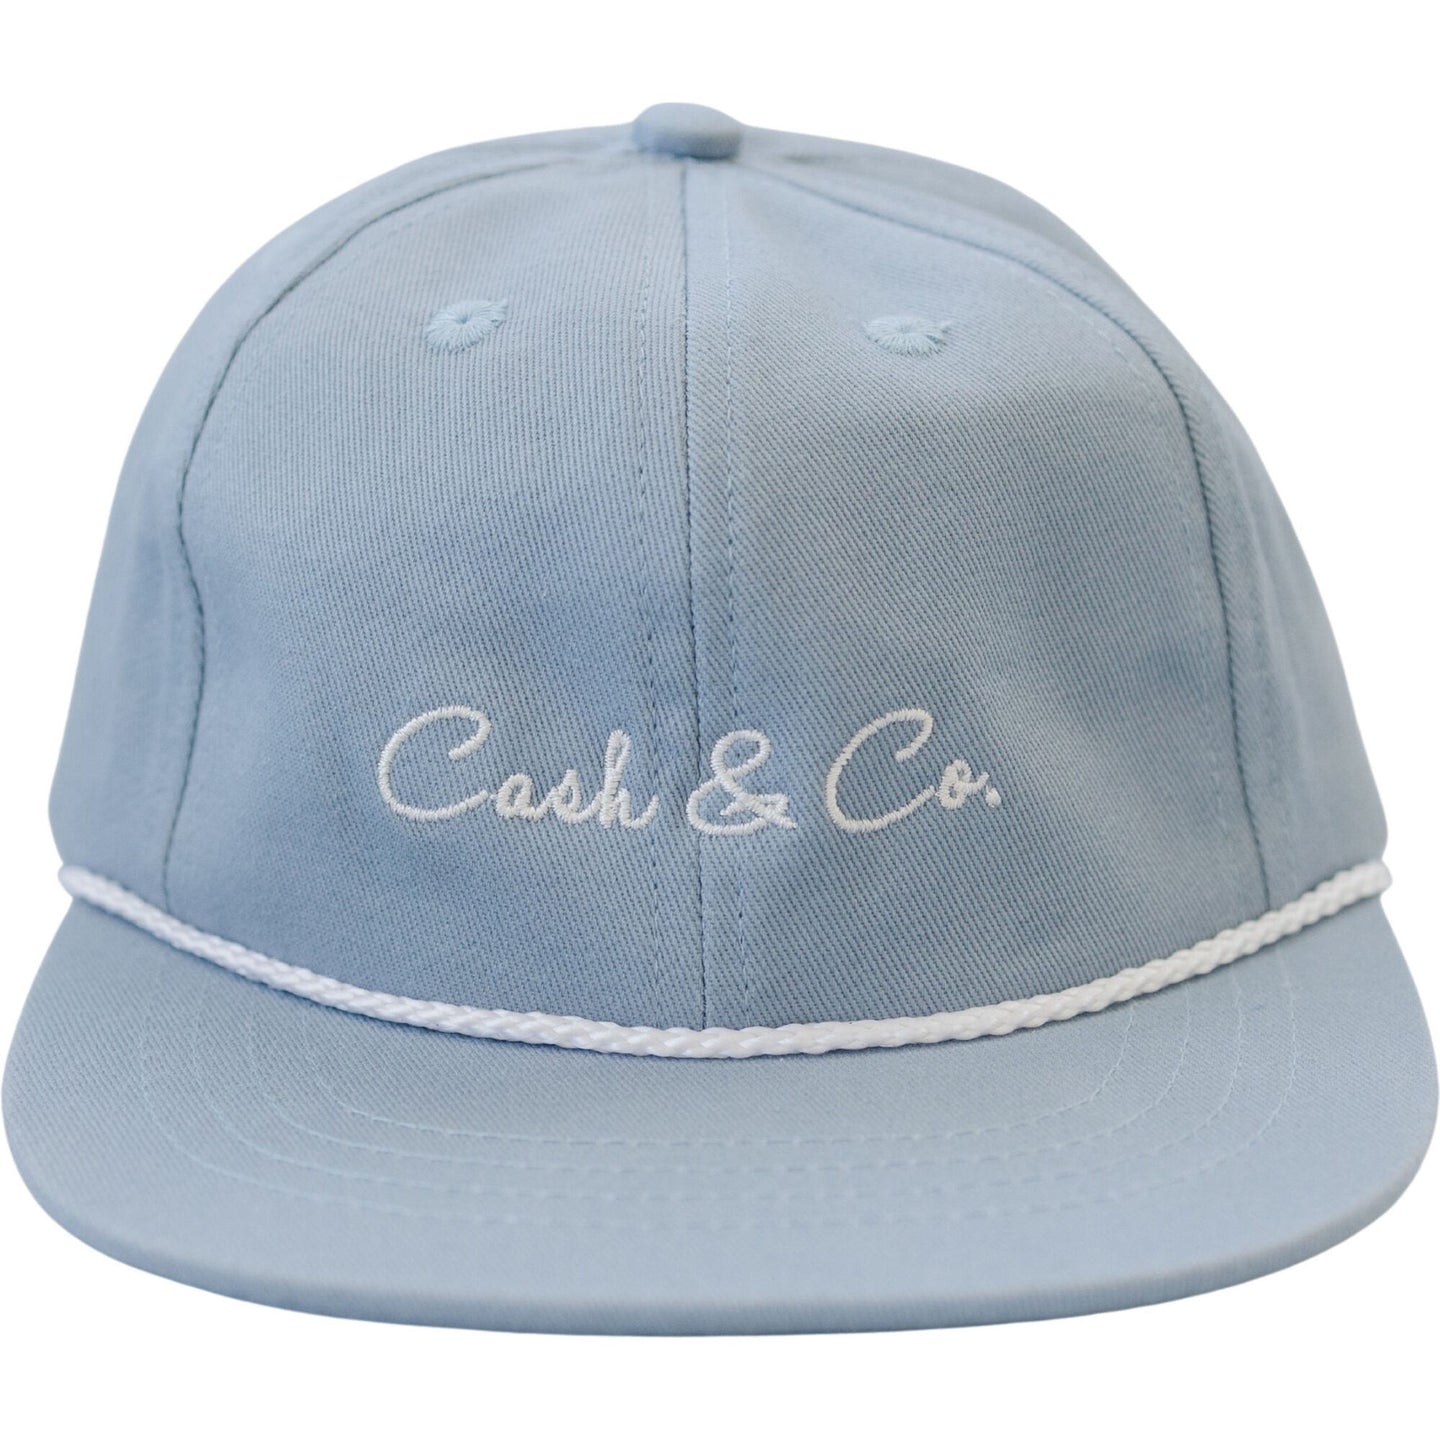 Cash & Co. - Malibu Hat